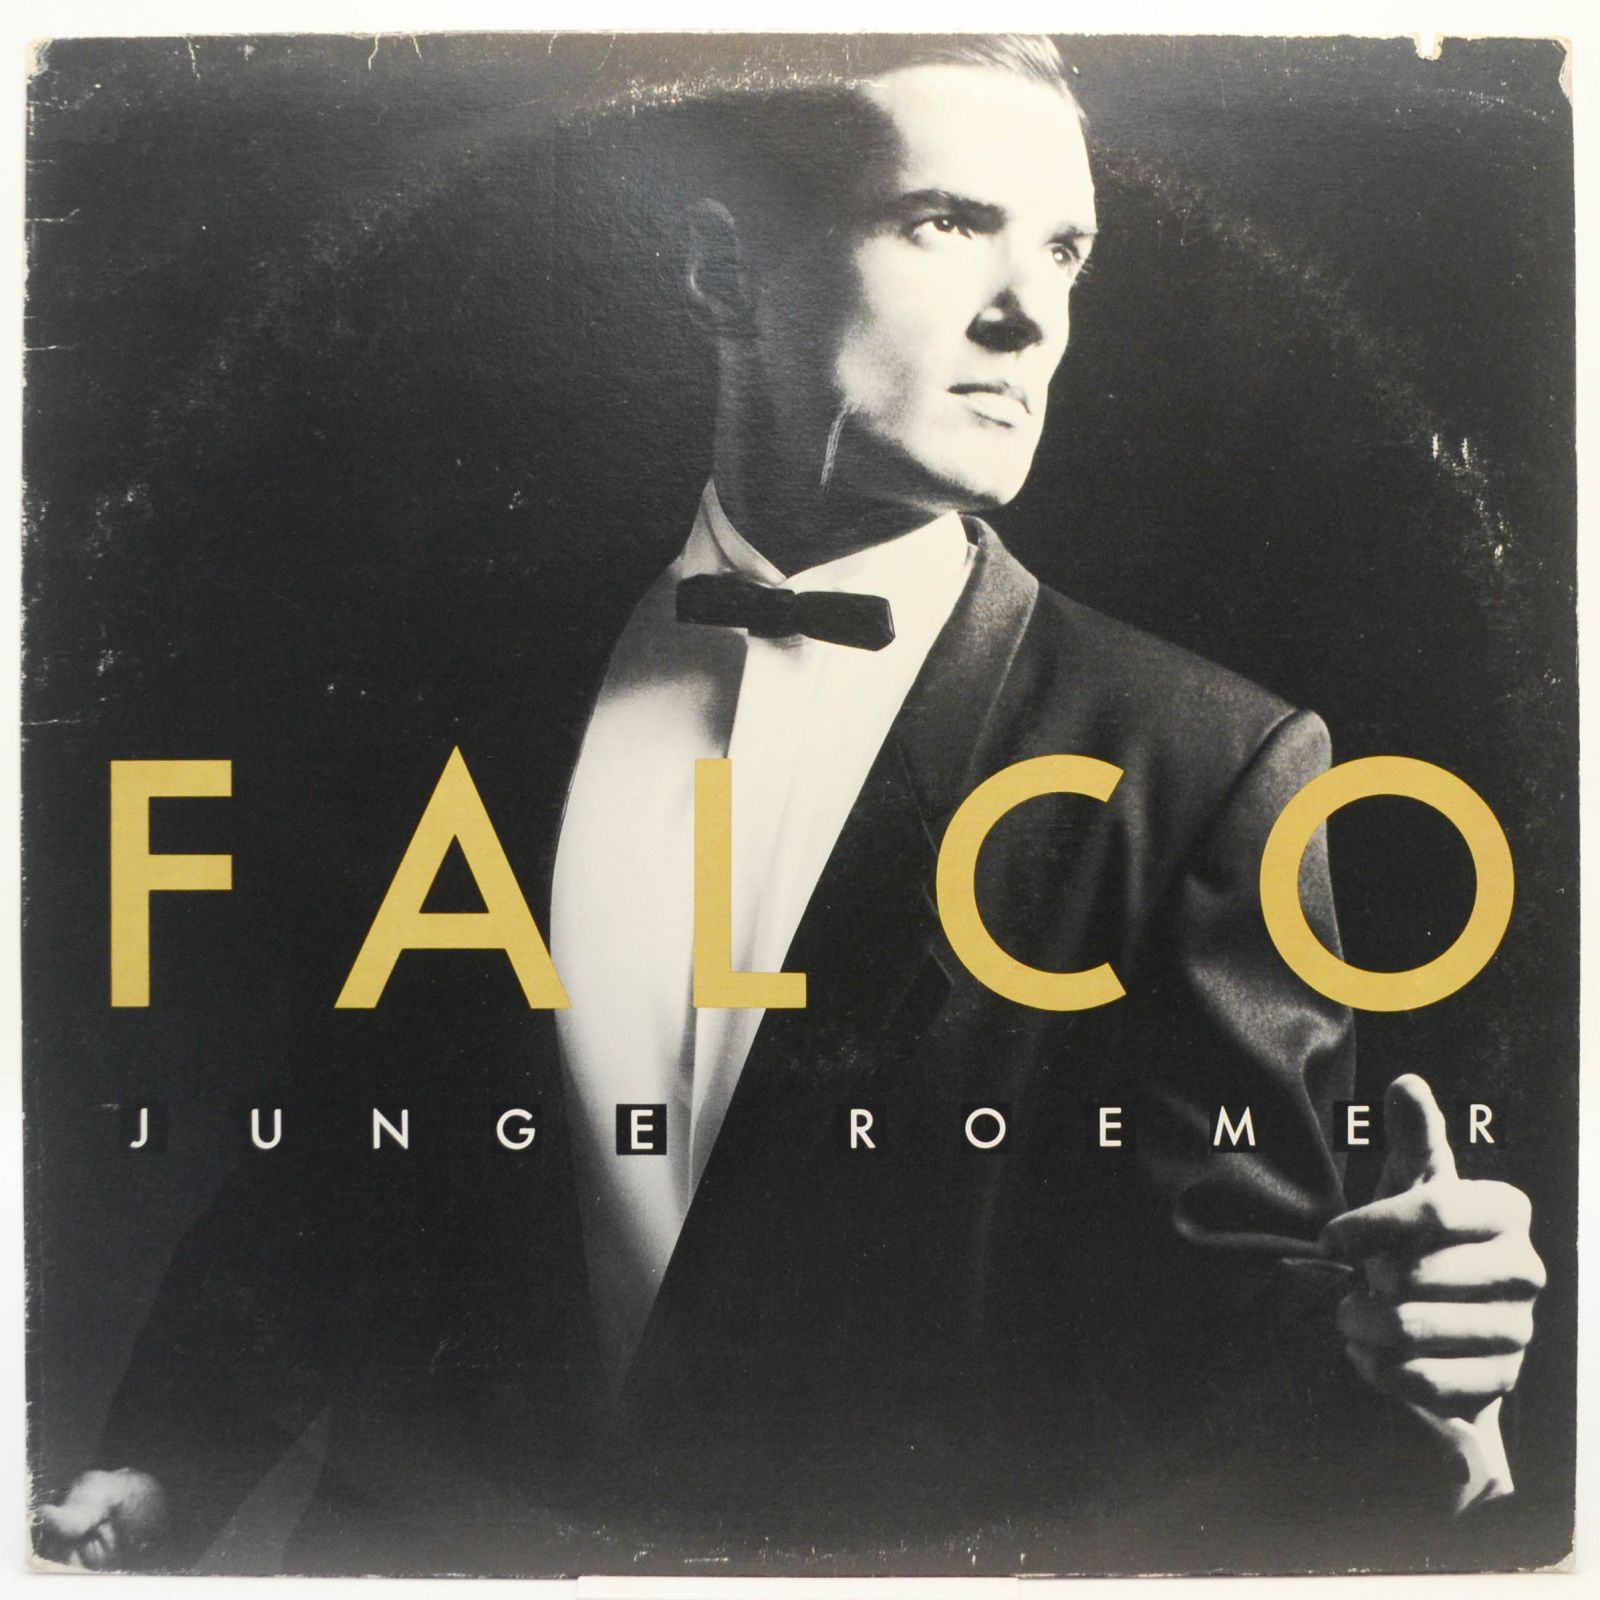 Falco — Junge Roemer, 1984